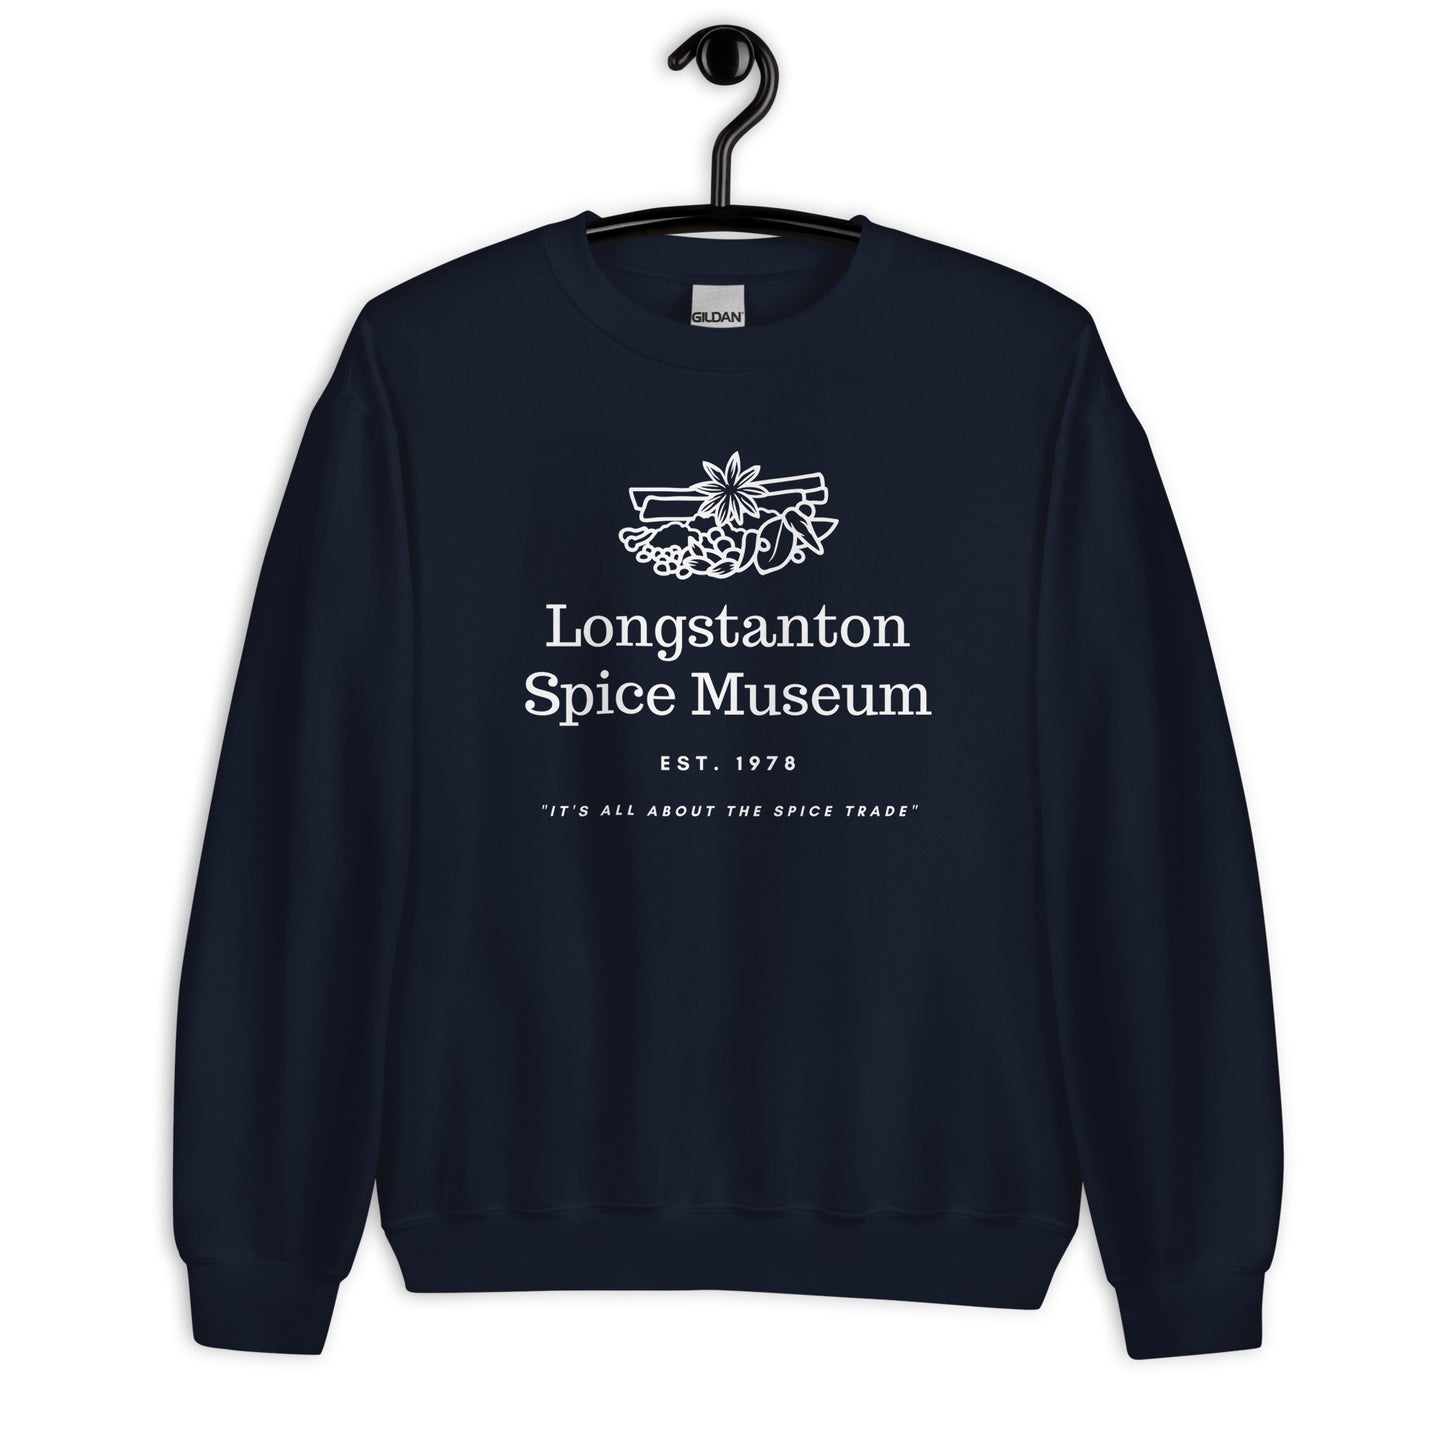 Longstanton Spice Museum Comedy Quote Sweatshirt